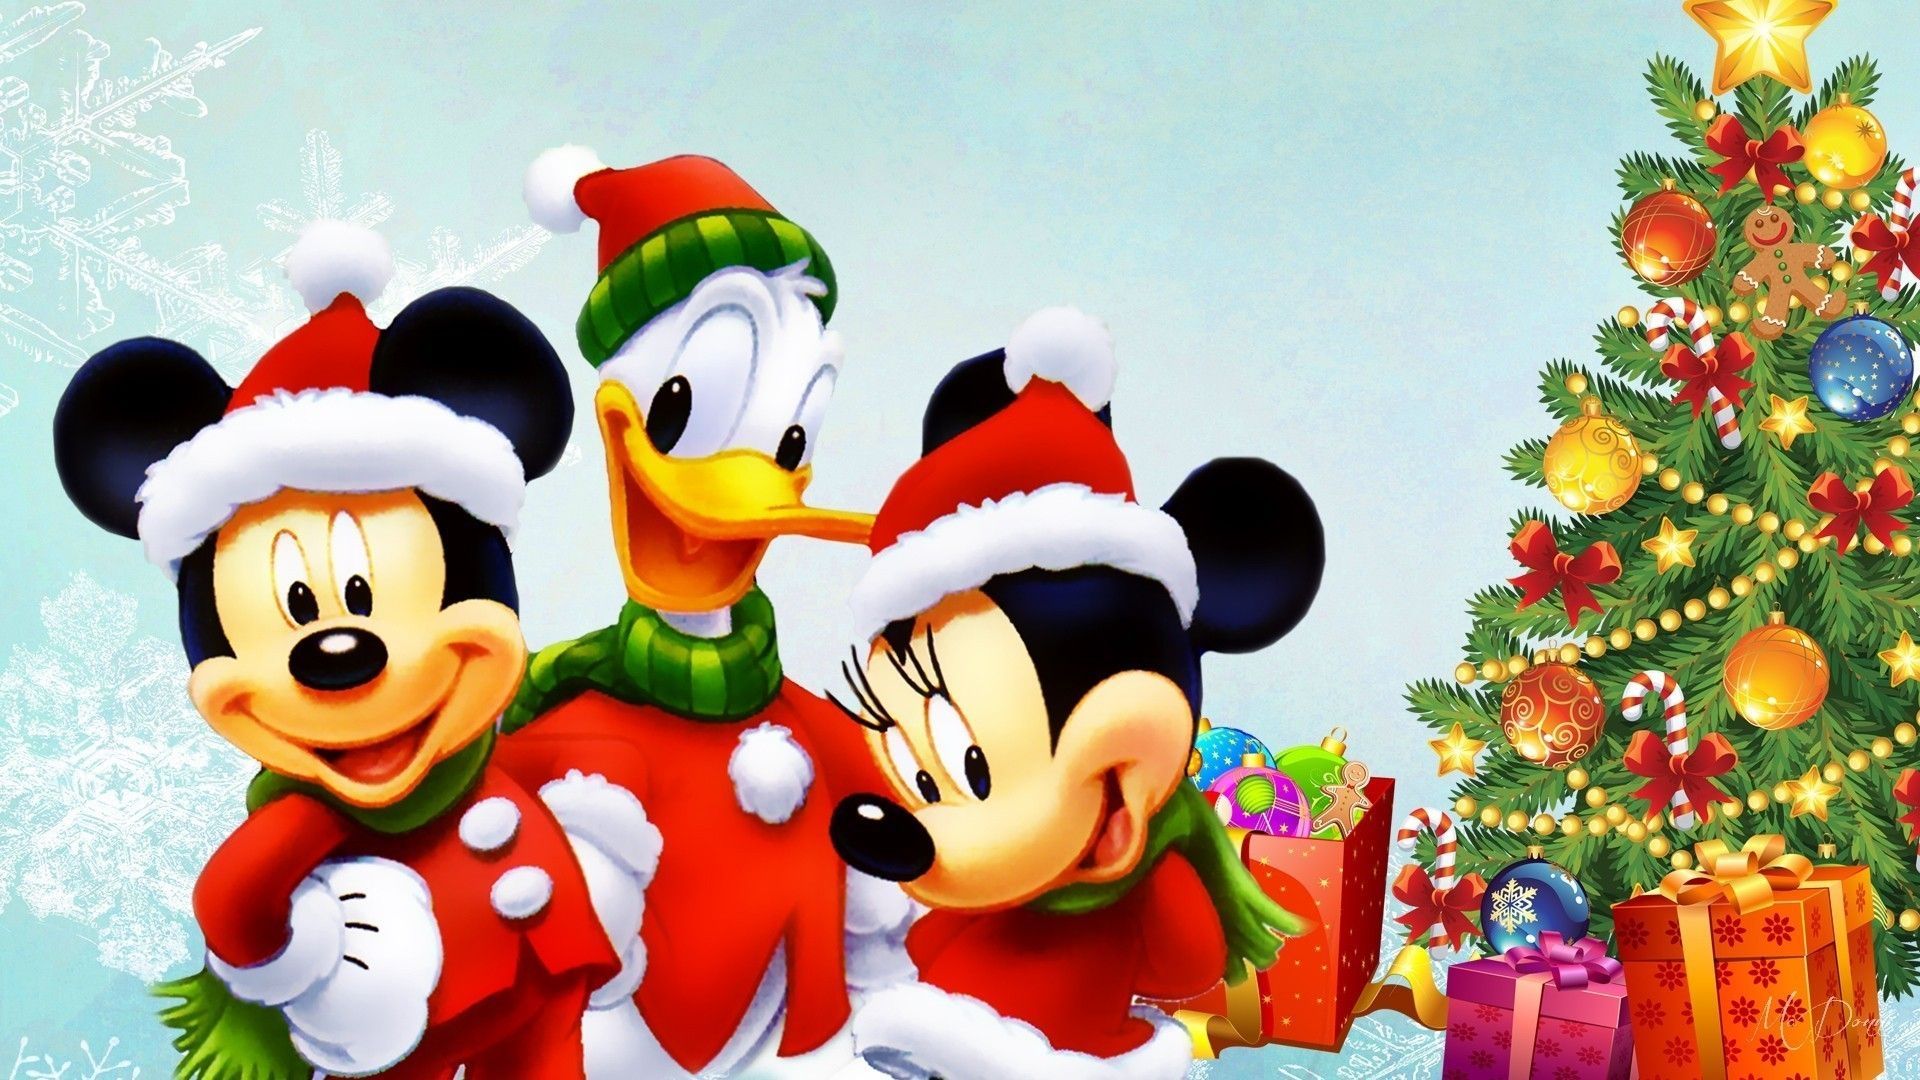 Merry Christmas Cartoon Image free Picture 2018. Disney merry christmas, Christmas wallpaper background, Christmas cartoons